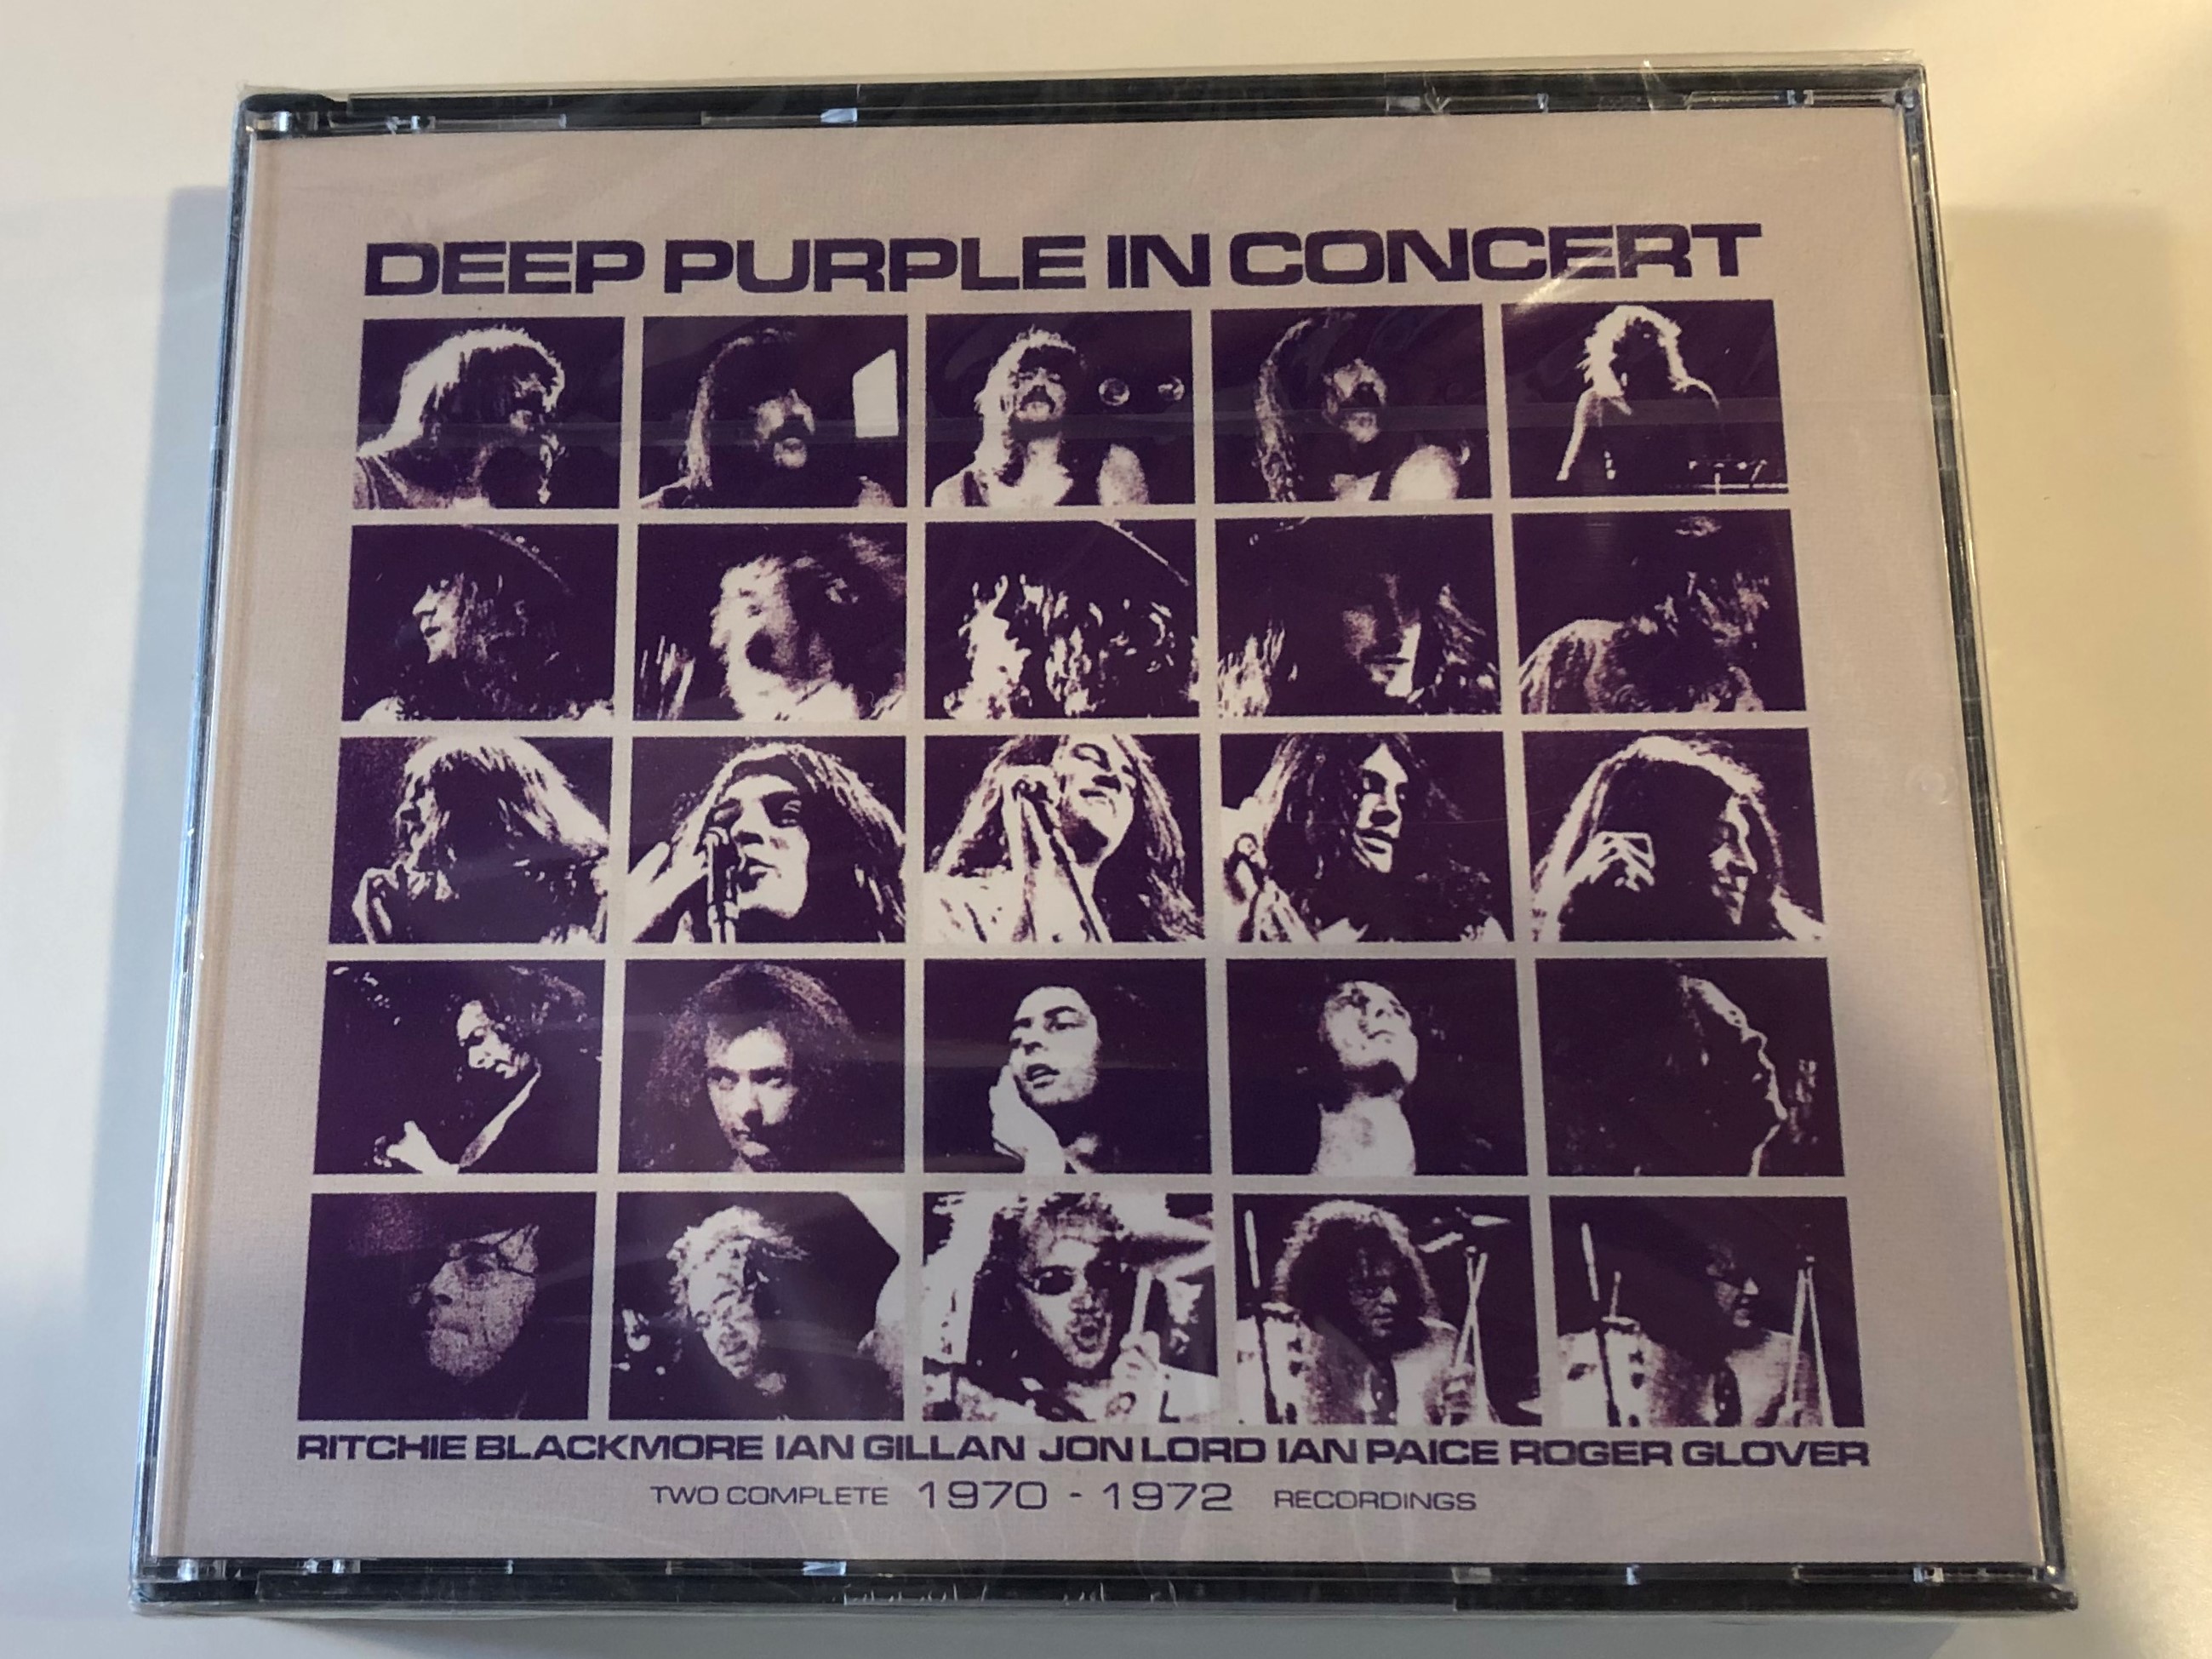 deep-purple-in-concert-ritchie-blackmore-ian-gillan-jon-lord-ian-paice-roger-glover-two-complete-1970-1972-recordings-hec-enterprises-ltd.-2x-audio-cd-1980-cds-7981812-1-.jpg